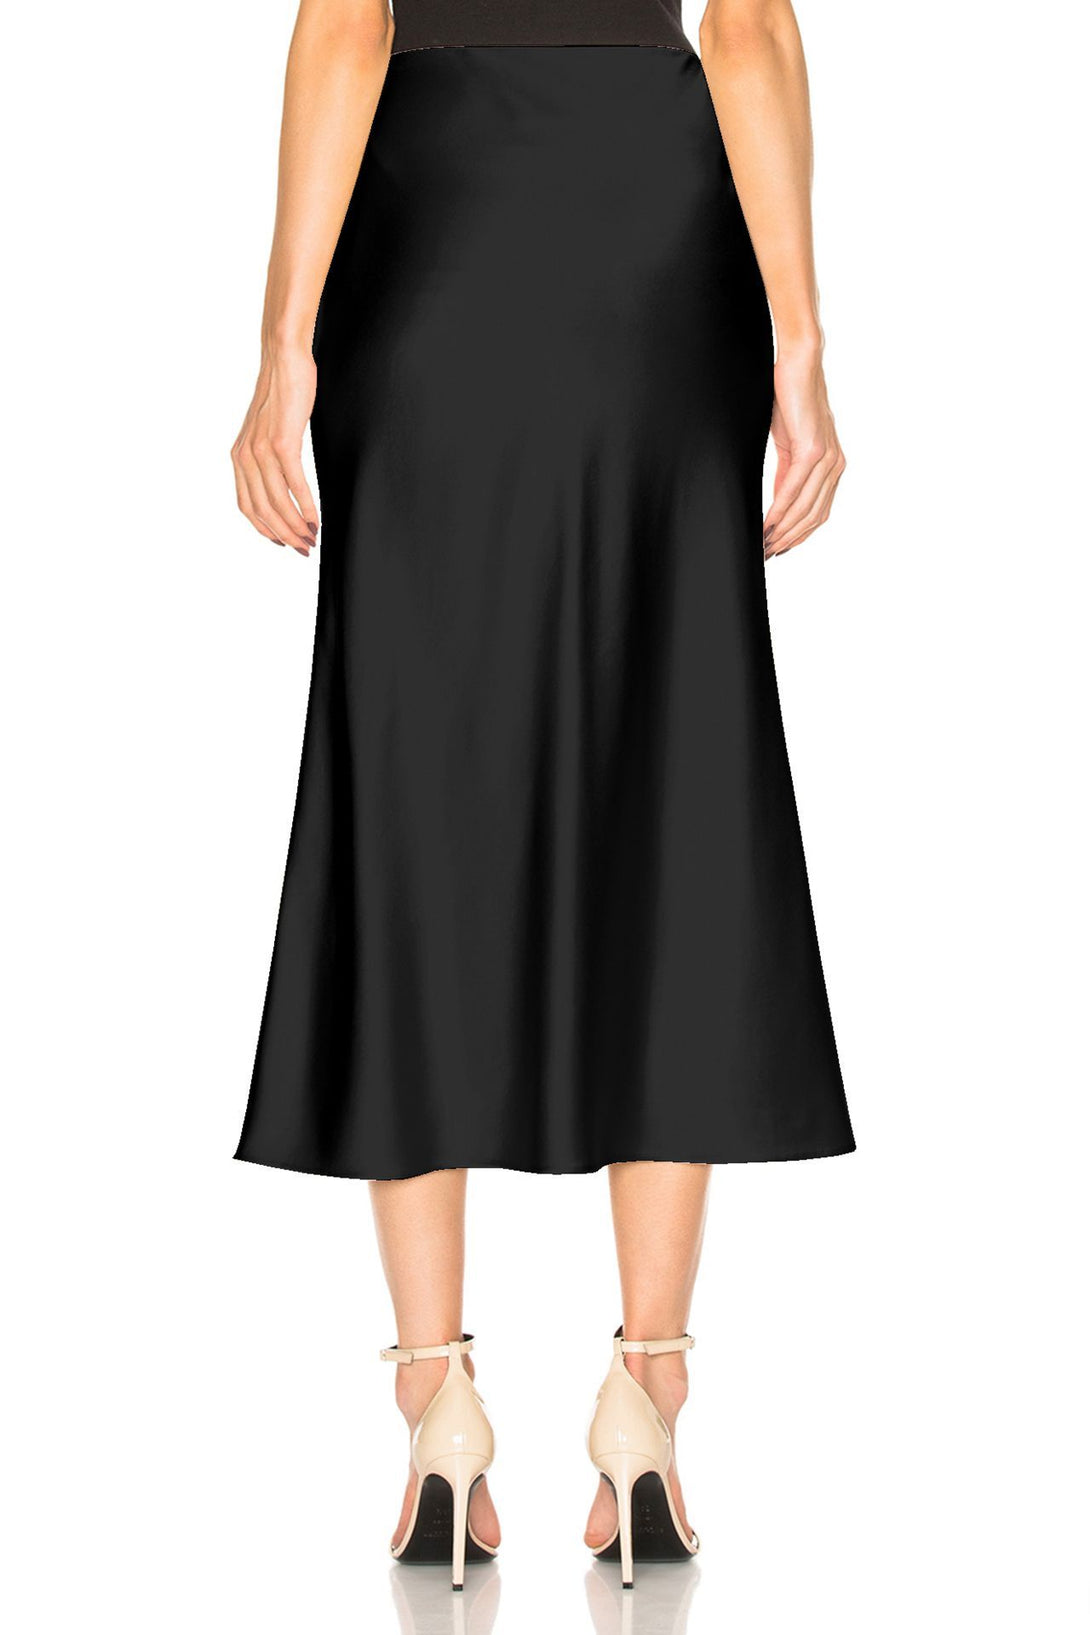 Silk-Skirt-In-Black-For-Womens-By-Kyle-Richard